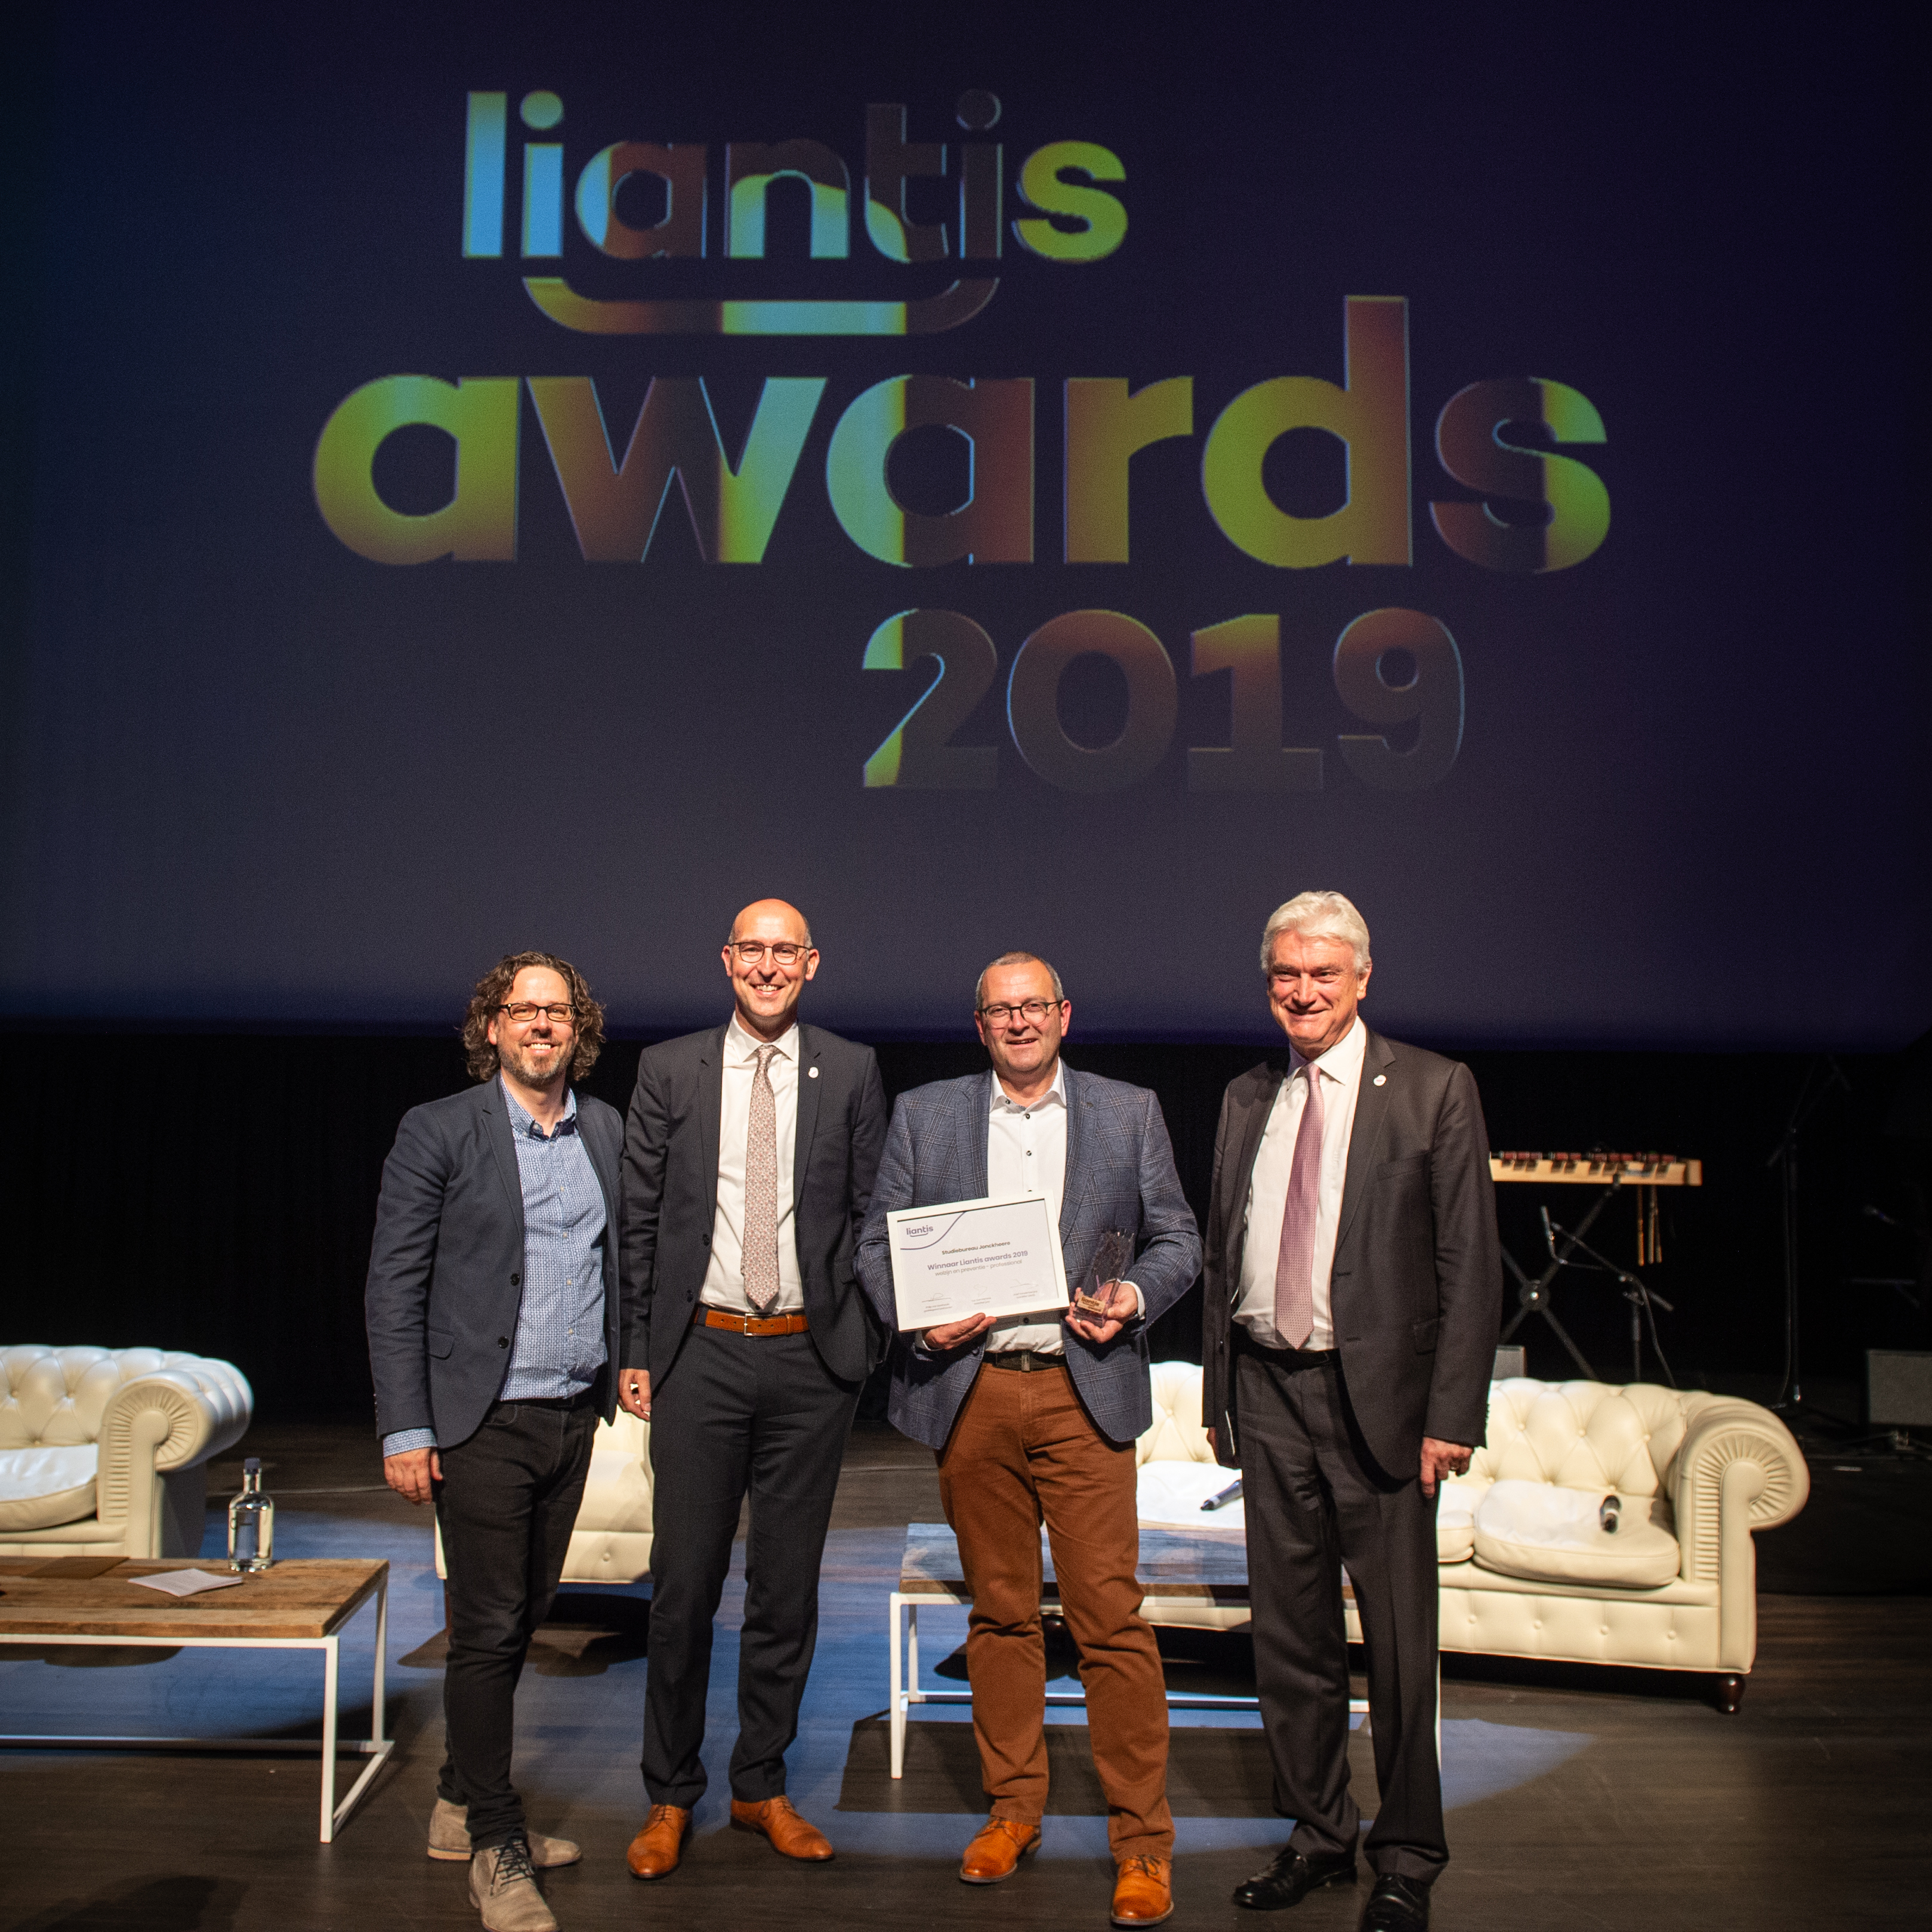 Liantis Awards 2019